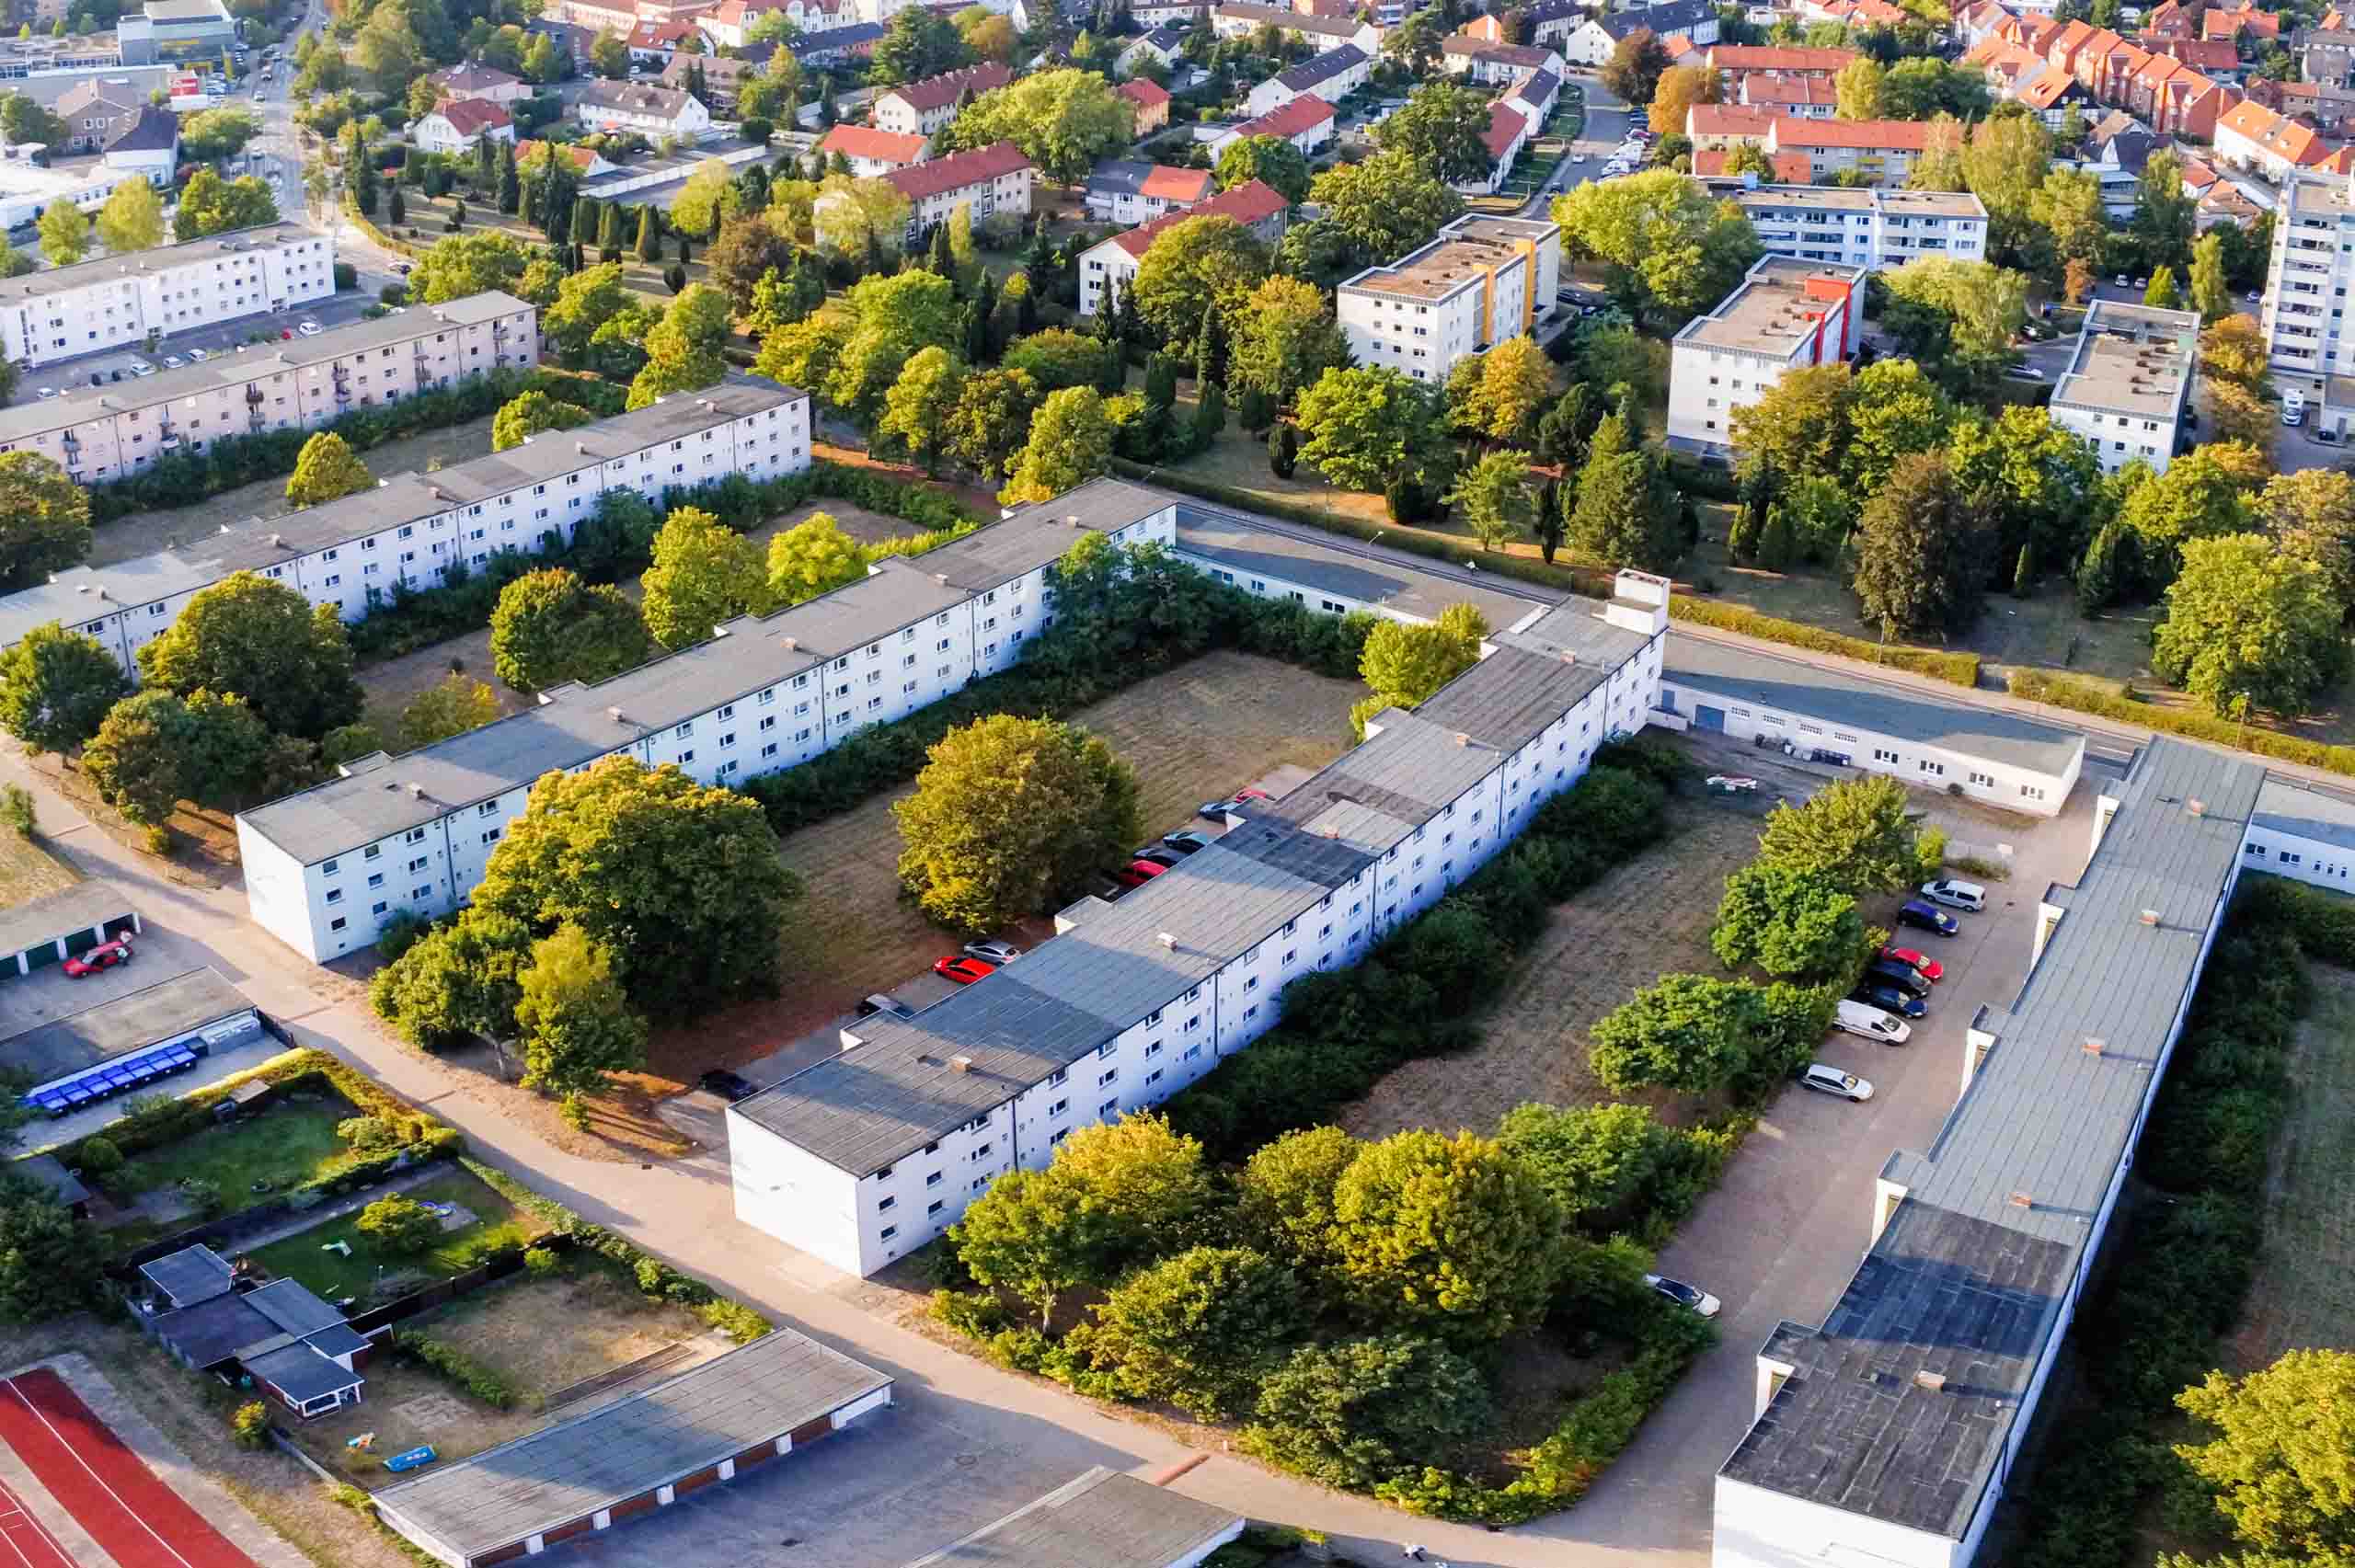 The Georgsgarten Housing Estate, Aerial view